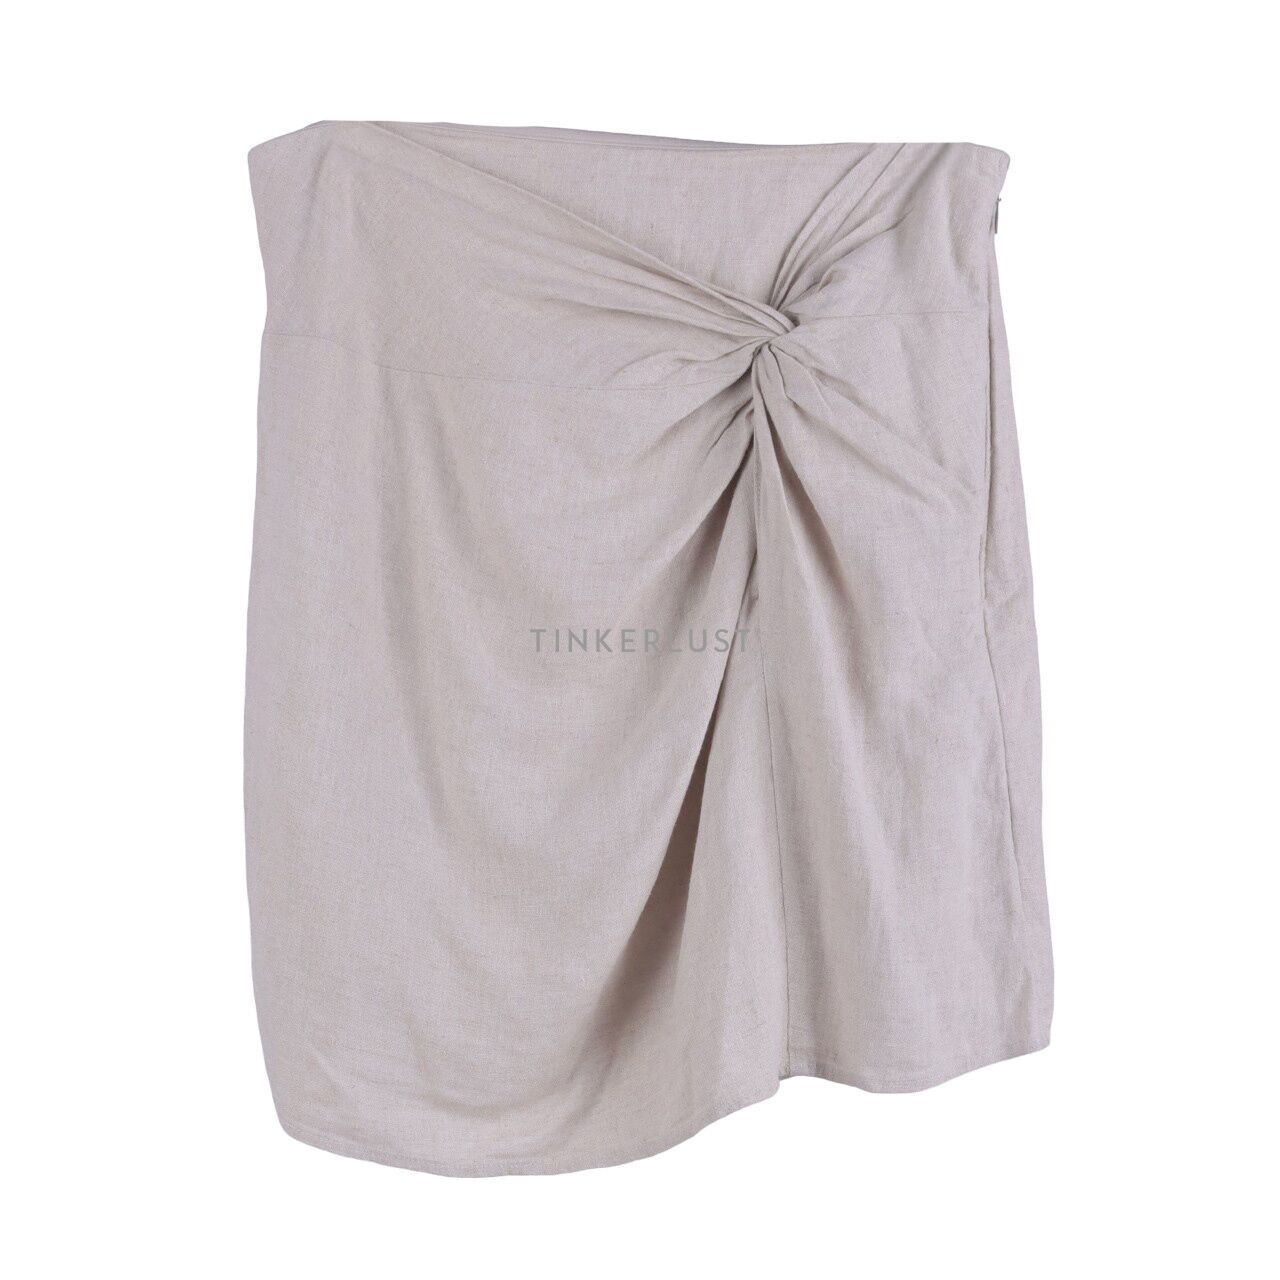 Abercrombie & Fitch Beige Mini Skirt